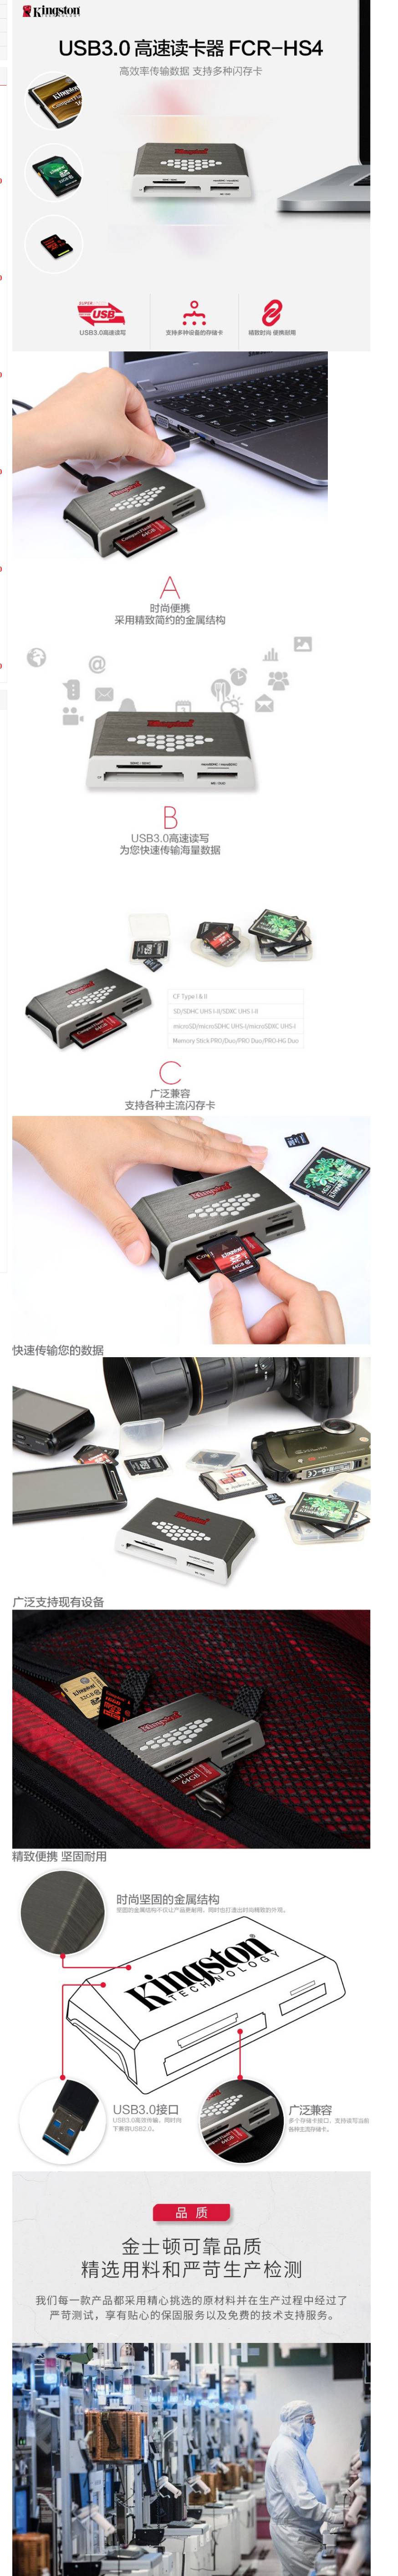 金士顿（kingston）USB 3.0 High-Speed Media Reader多功能读卡器(1).jpg